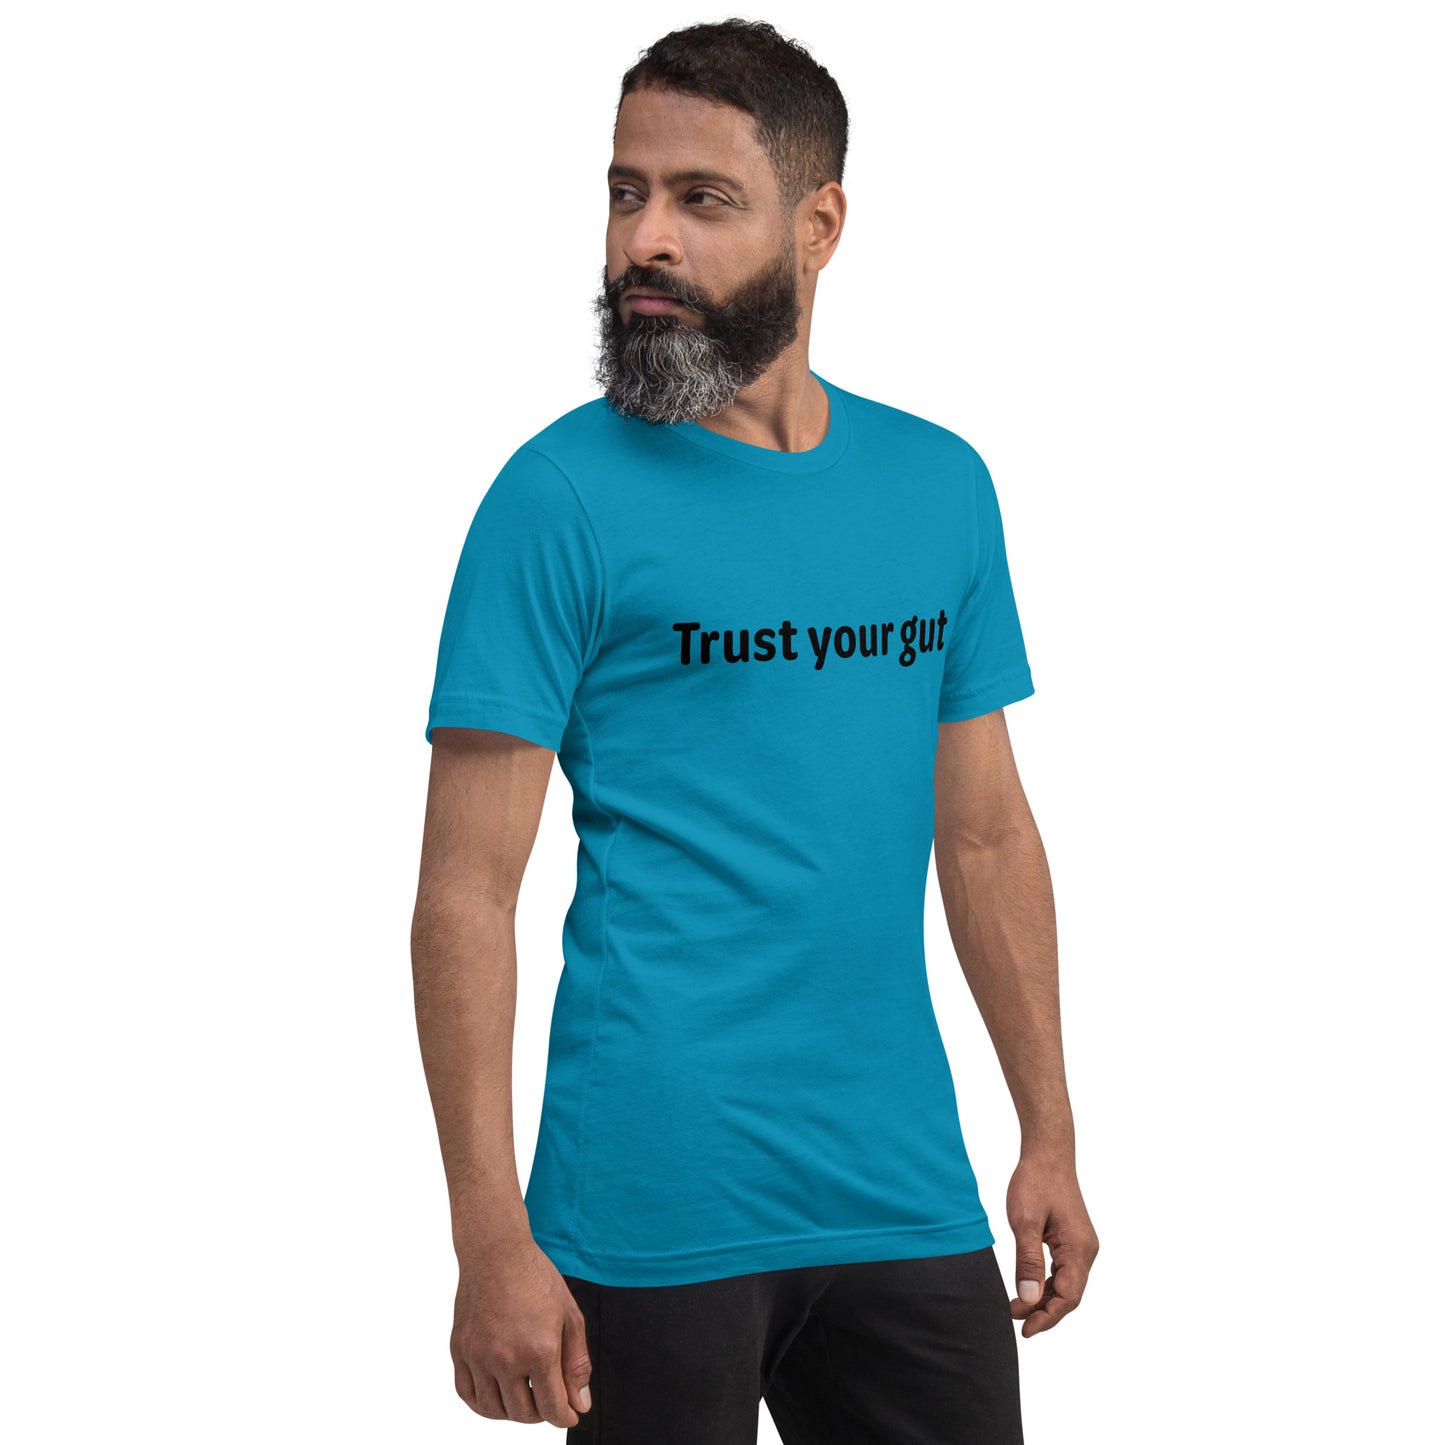 Trust your gut - Black Text - Mens T-Shirt